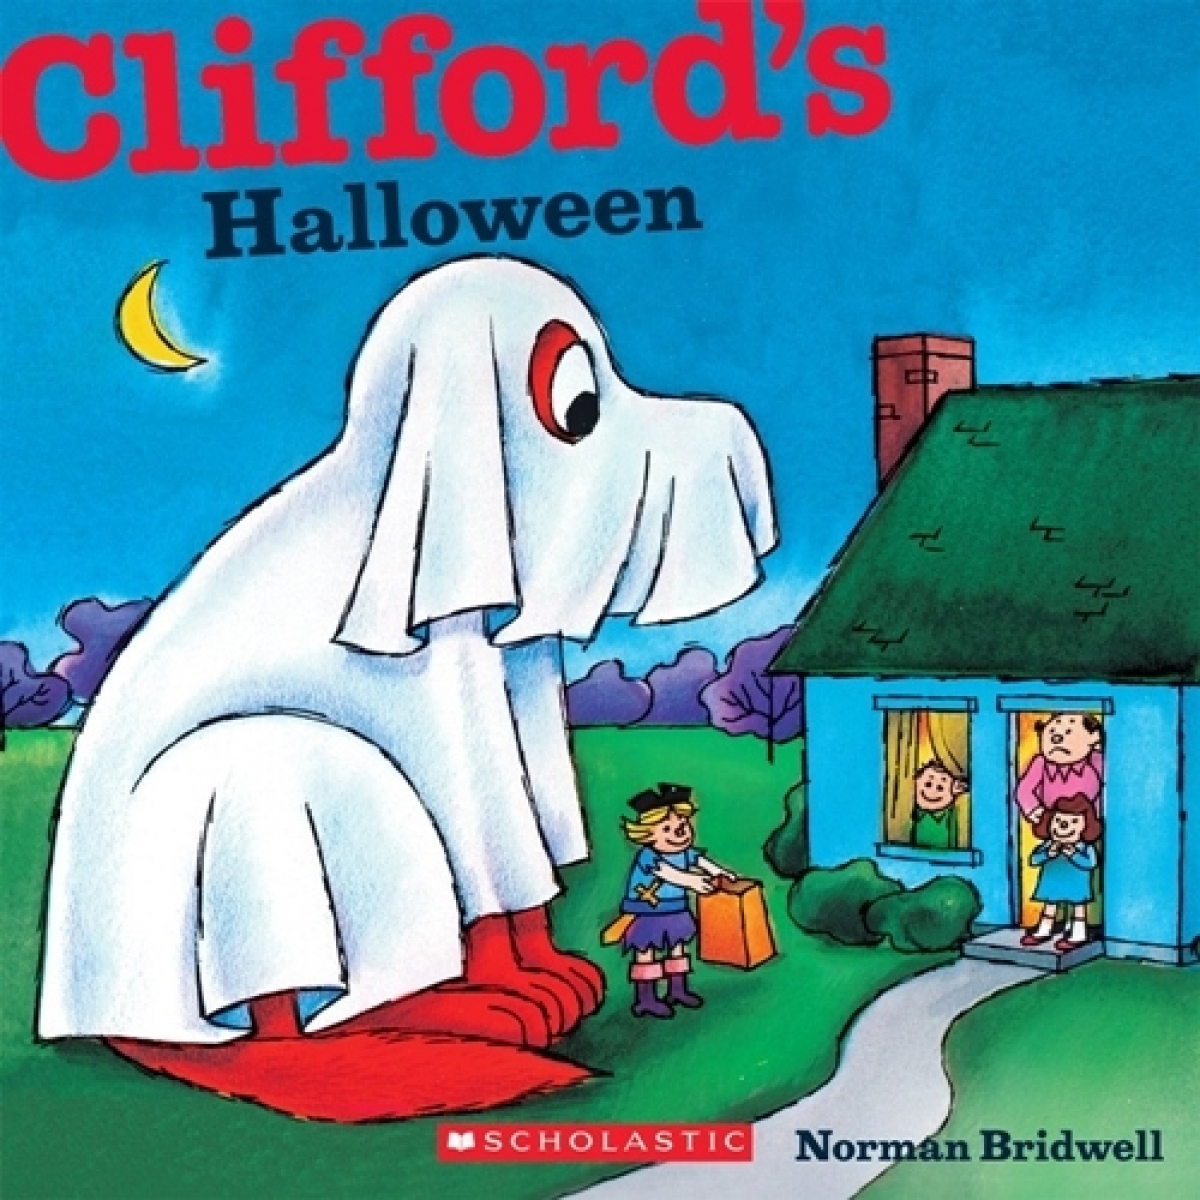 Norman, Bridwell Clifford's Halloween  (PB) illustr. 